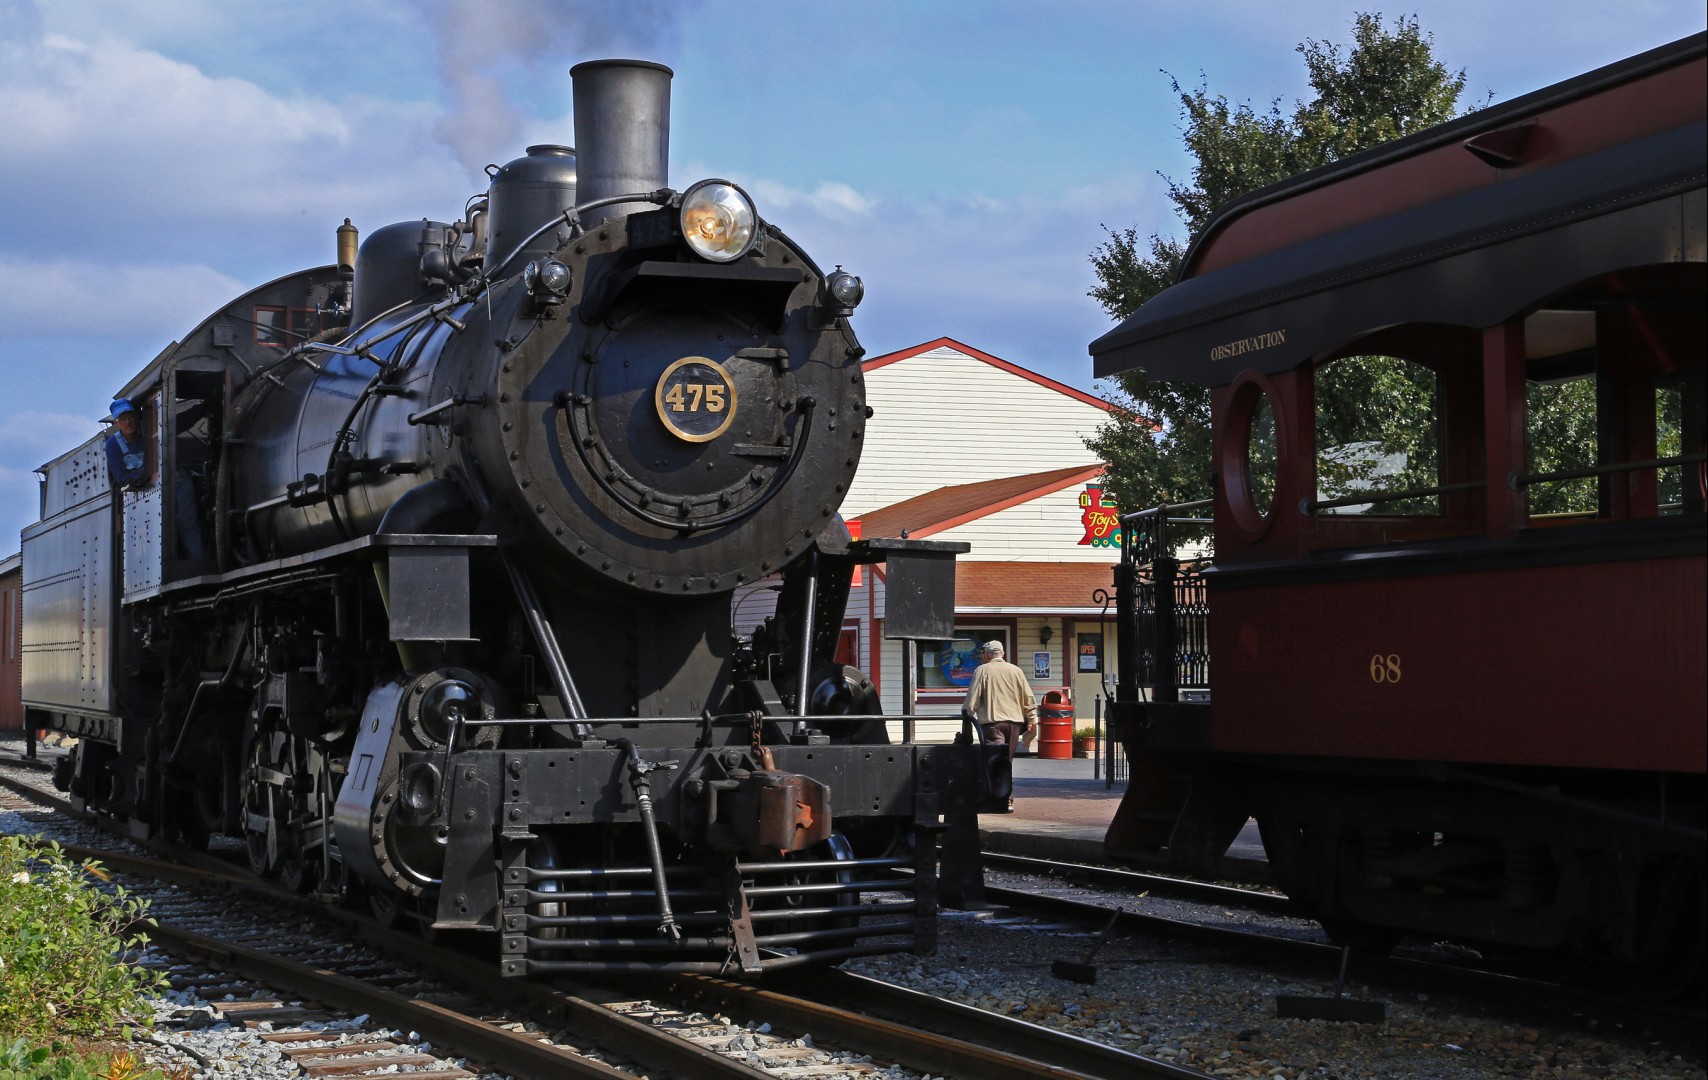 USA - Pennsylvania - Strasburg Rail Road - Locomotive Number 475